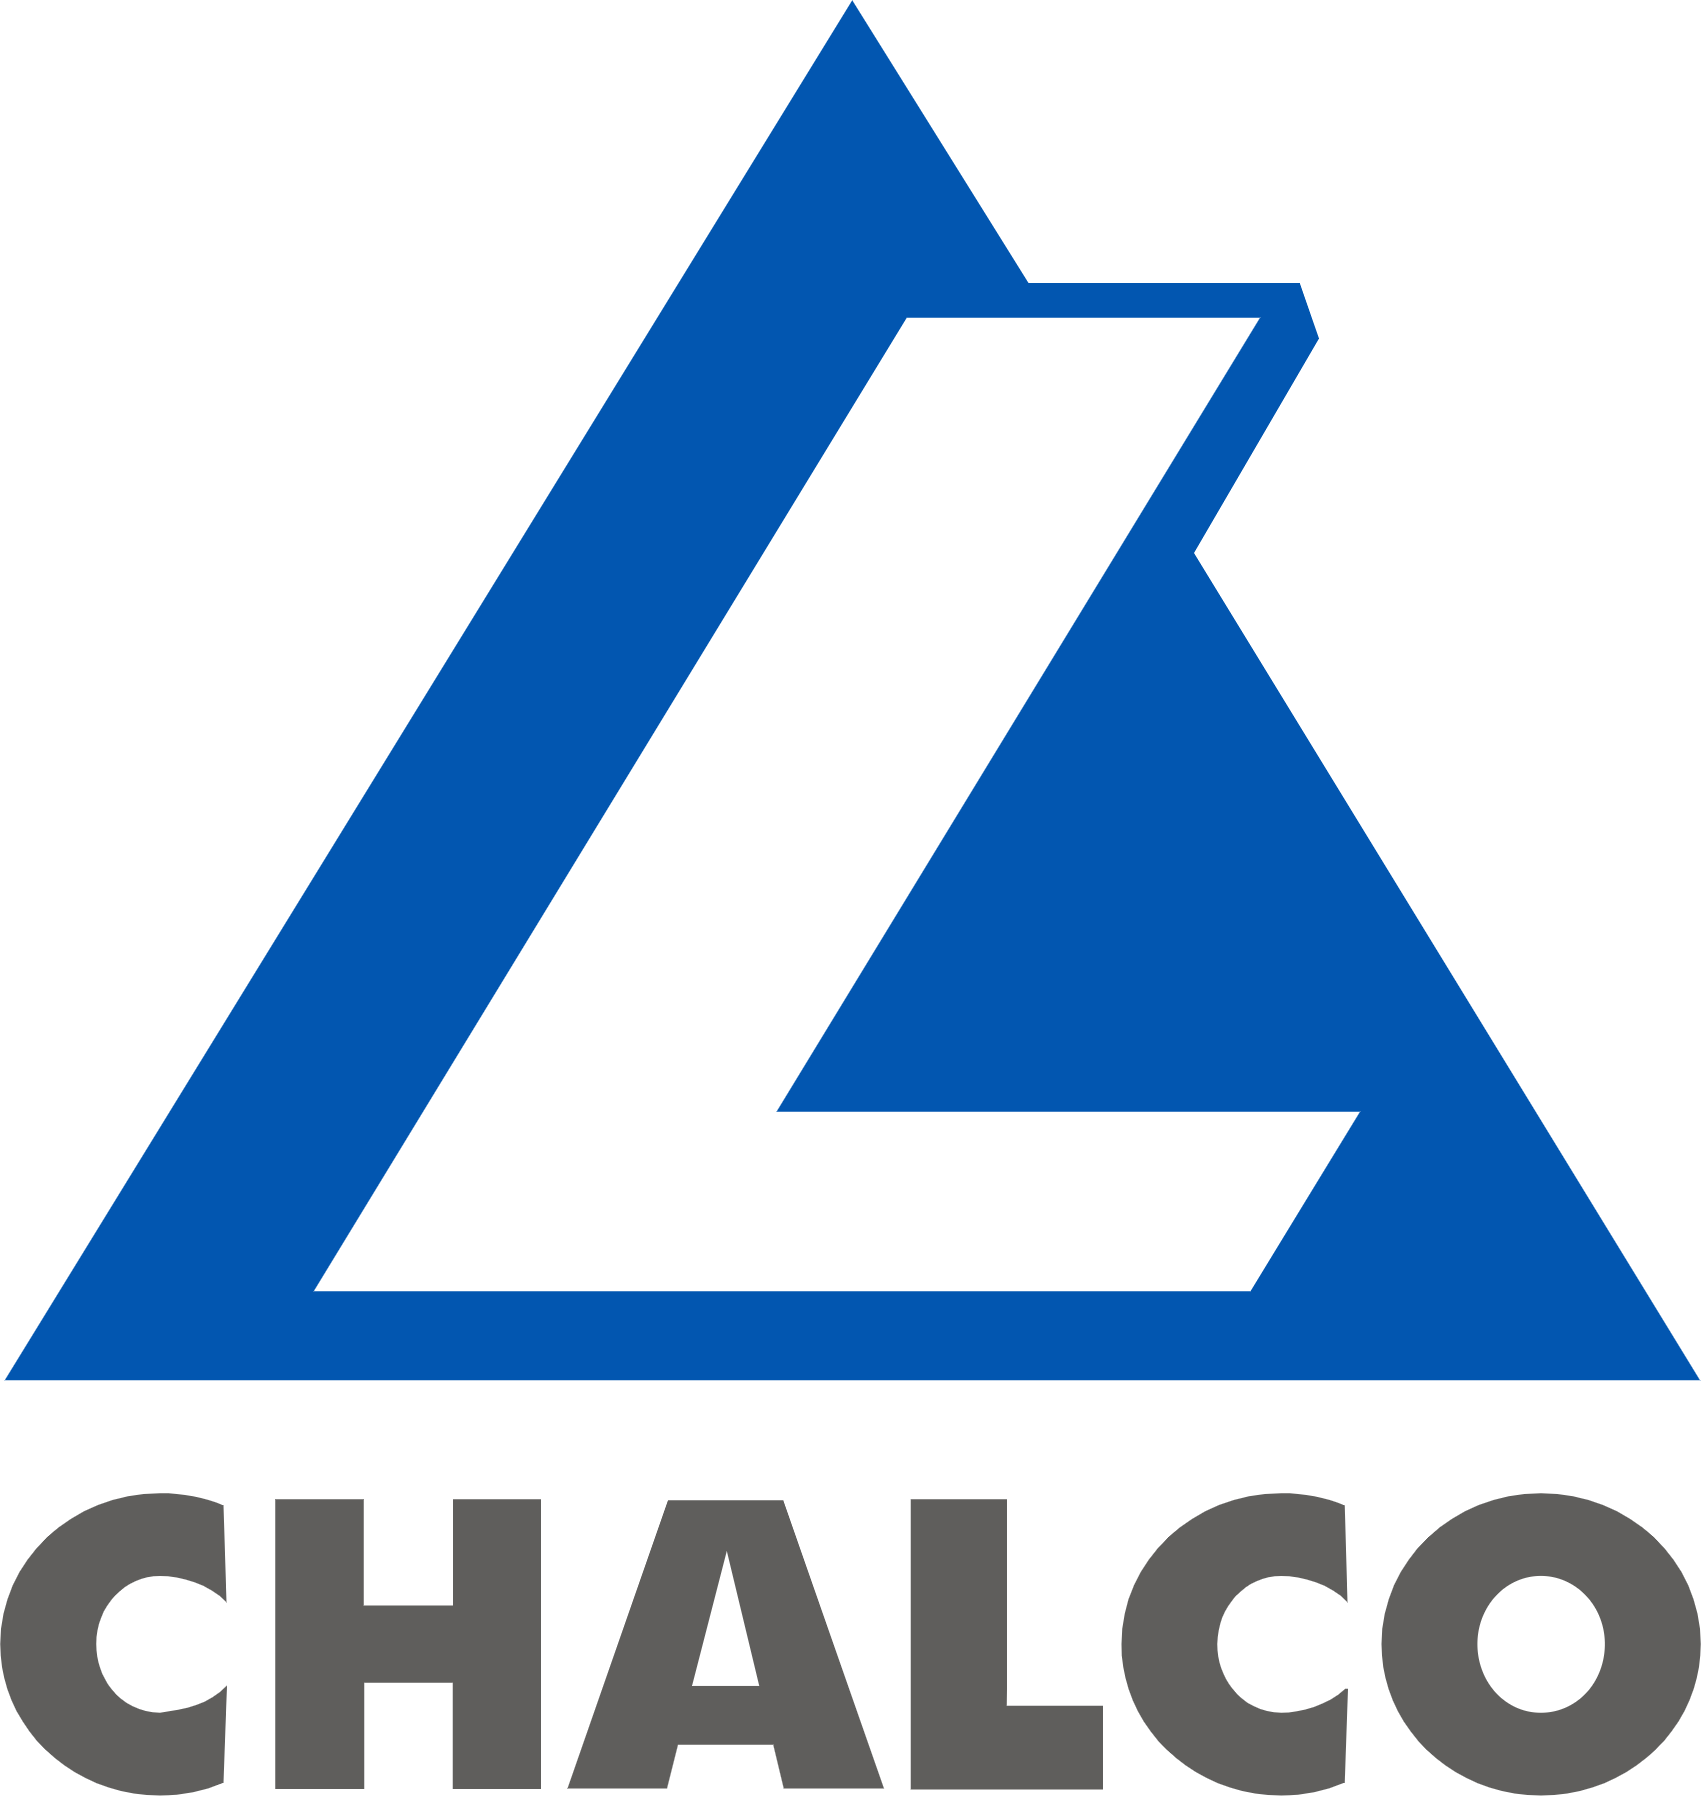 Aluminum Corporation of China logo large (transparent PNG)